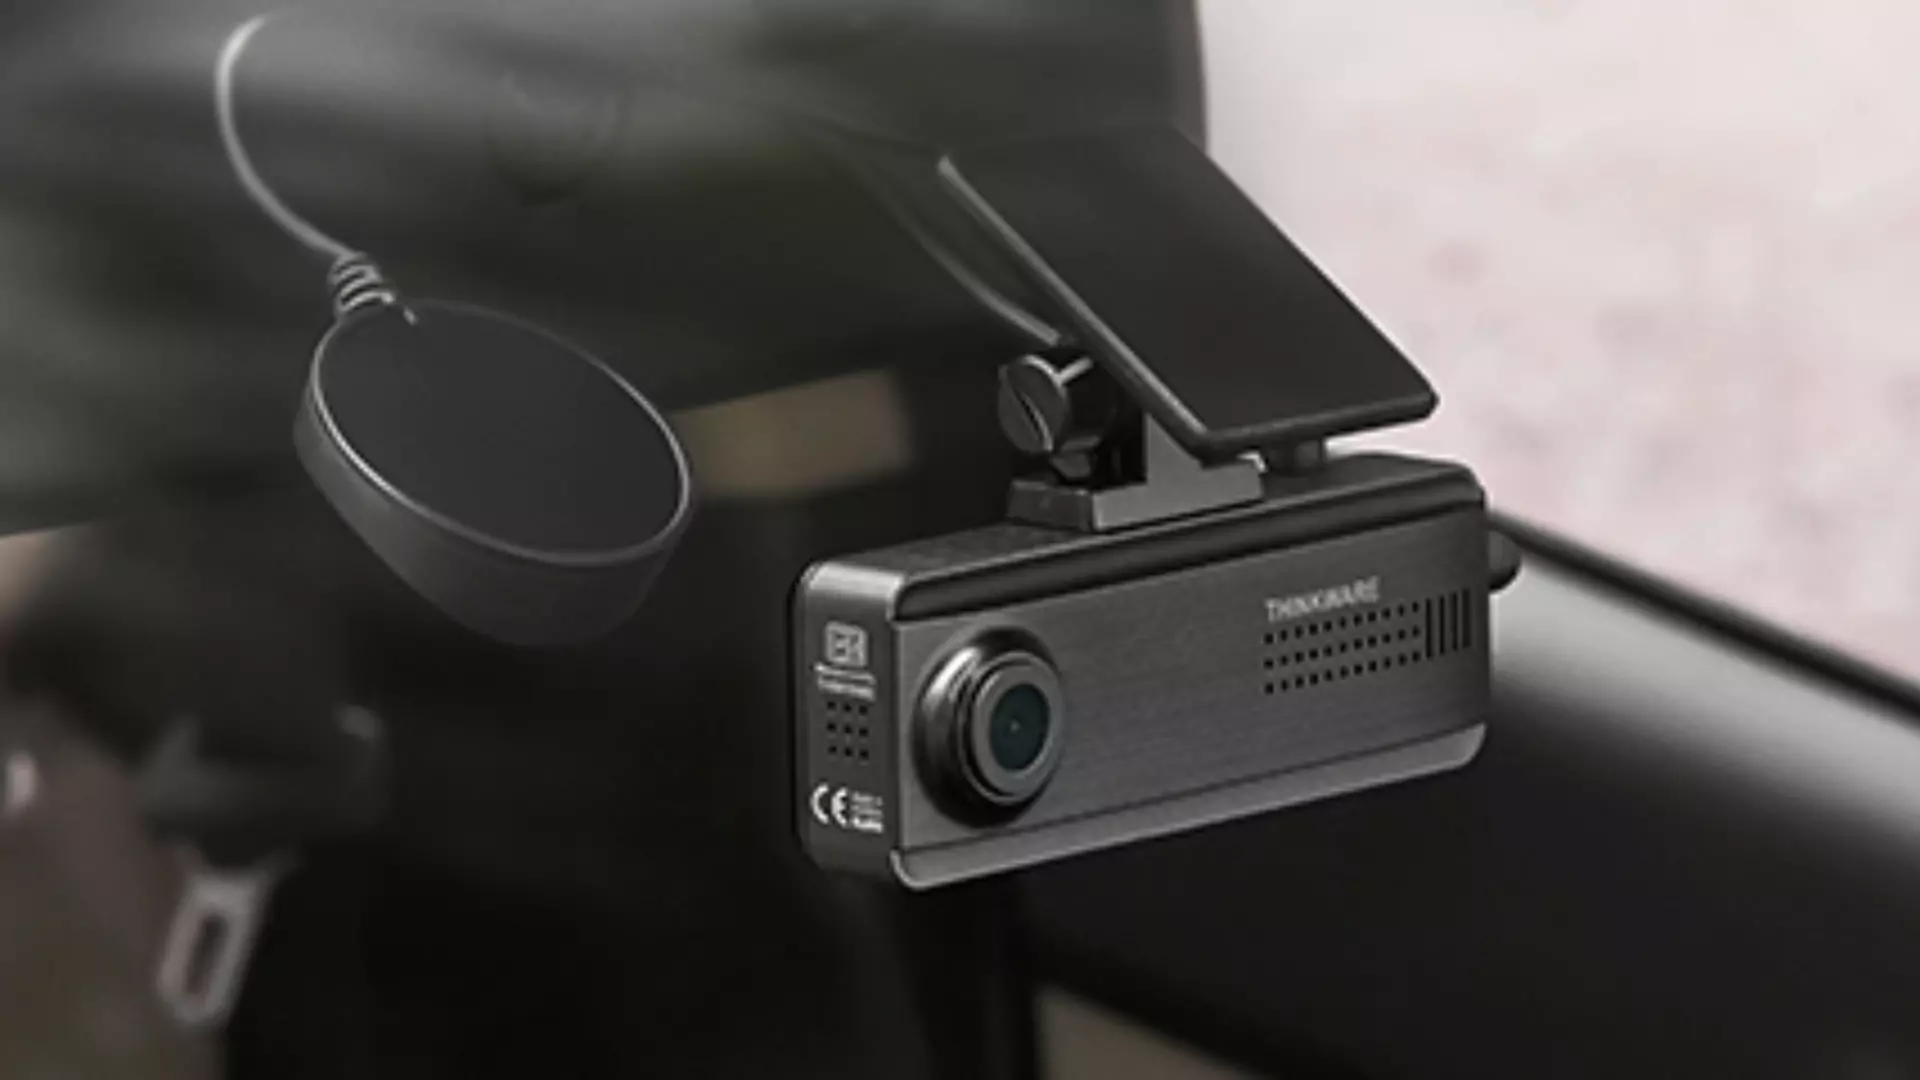 Thinkware F200 Pro Dashcam: Is It the Best Dashcam in the Market?